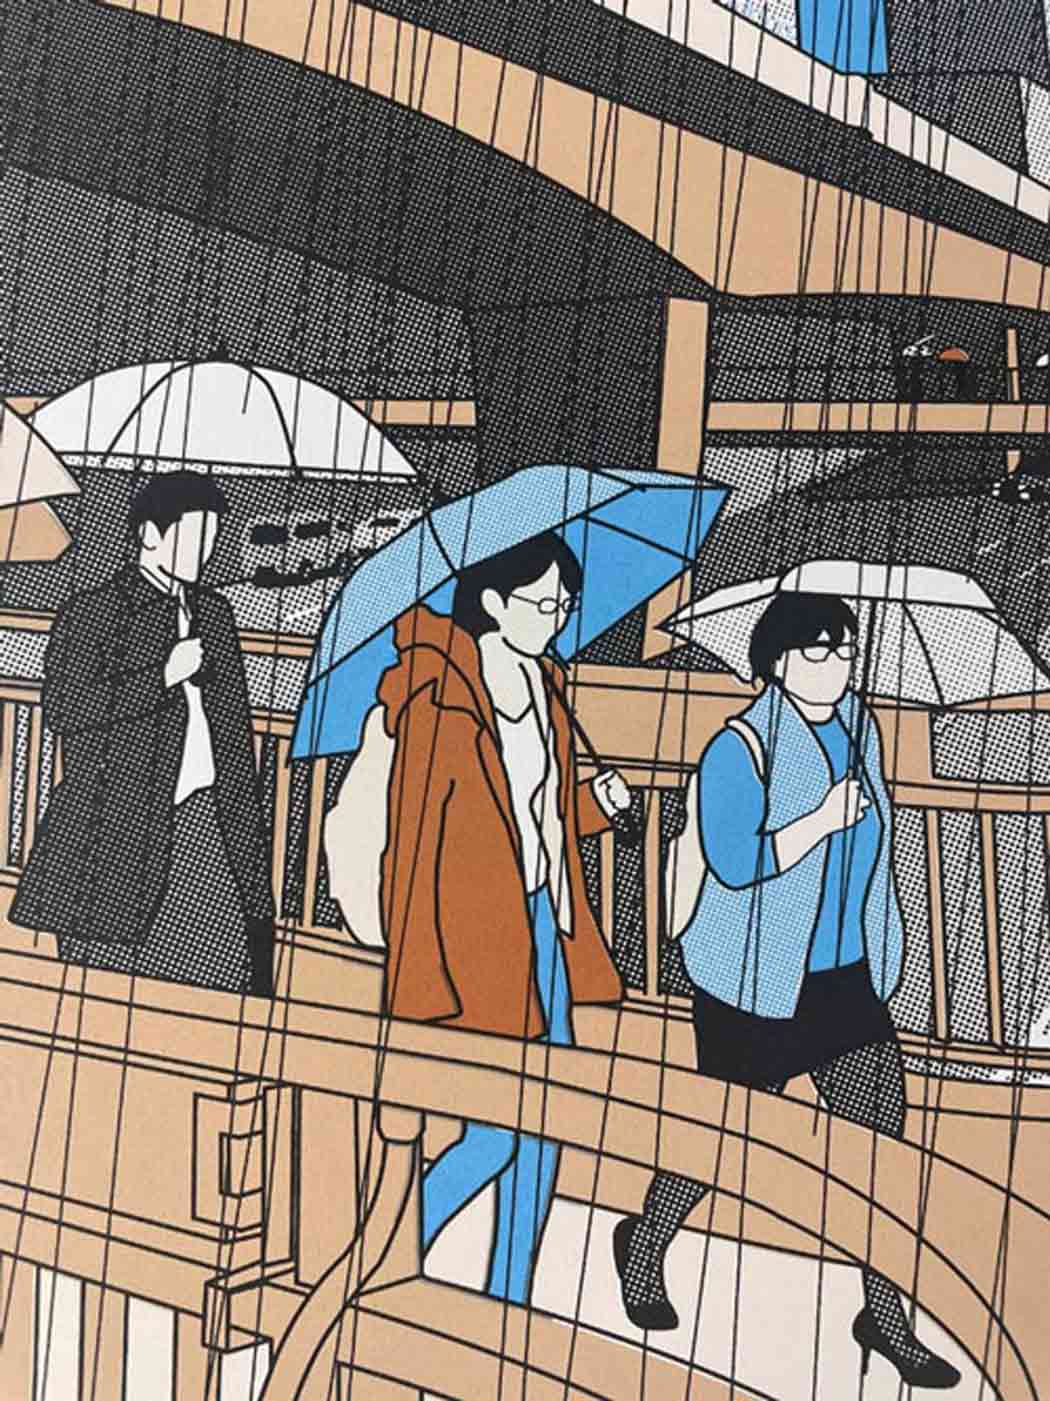 Shibuya In The Rain Enlarged